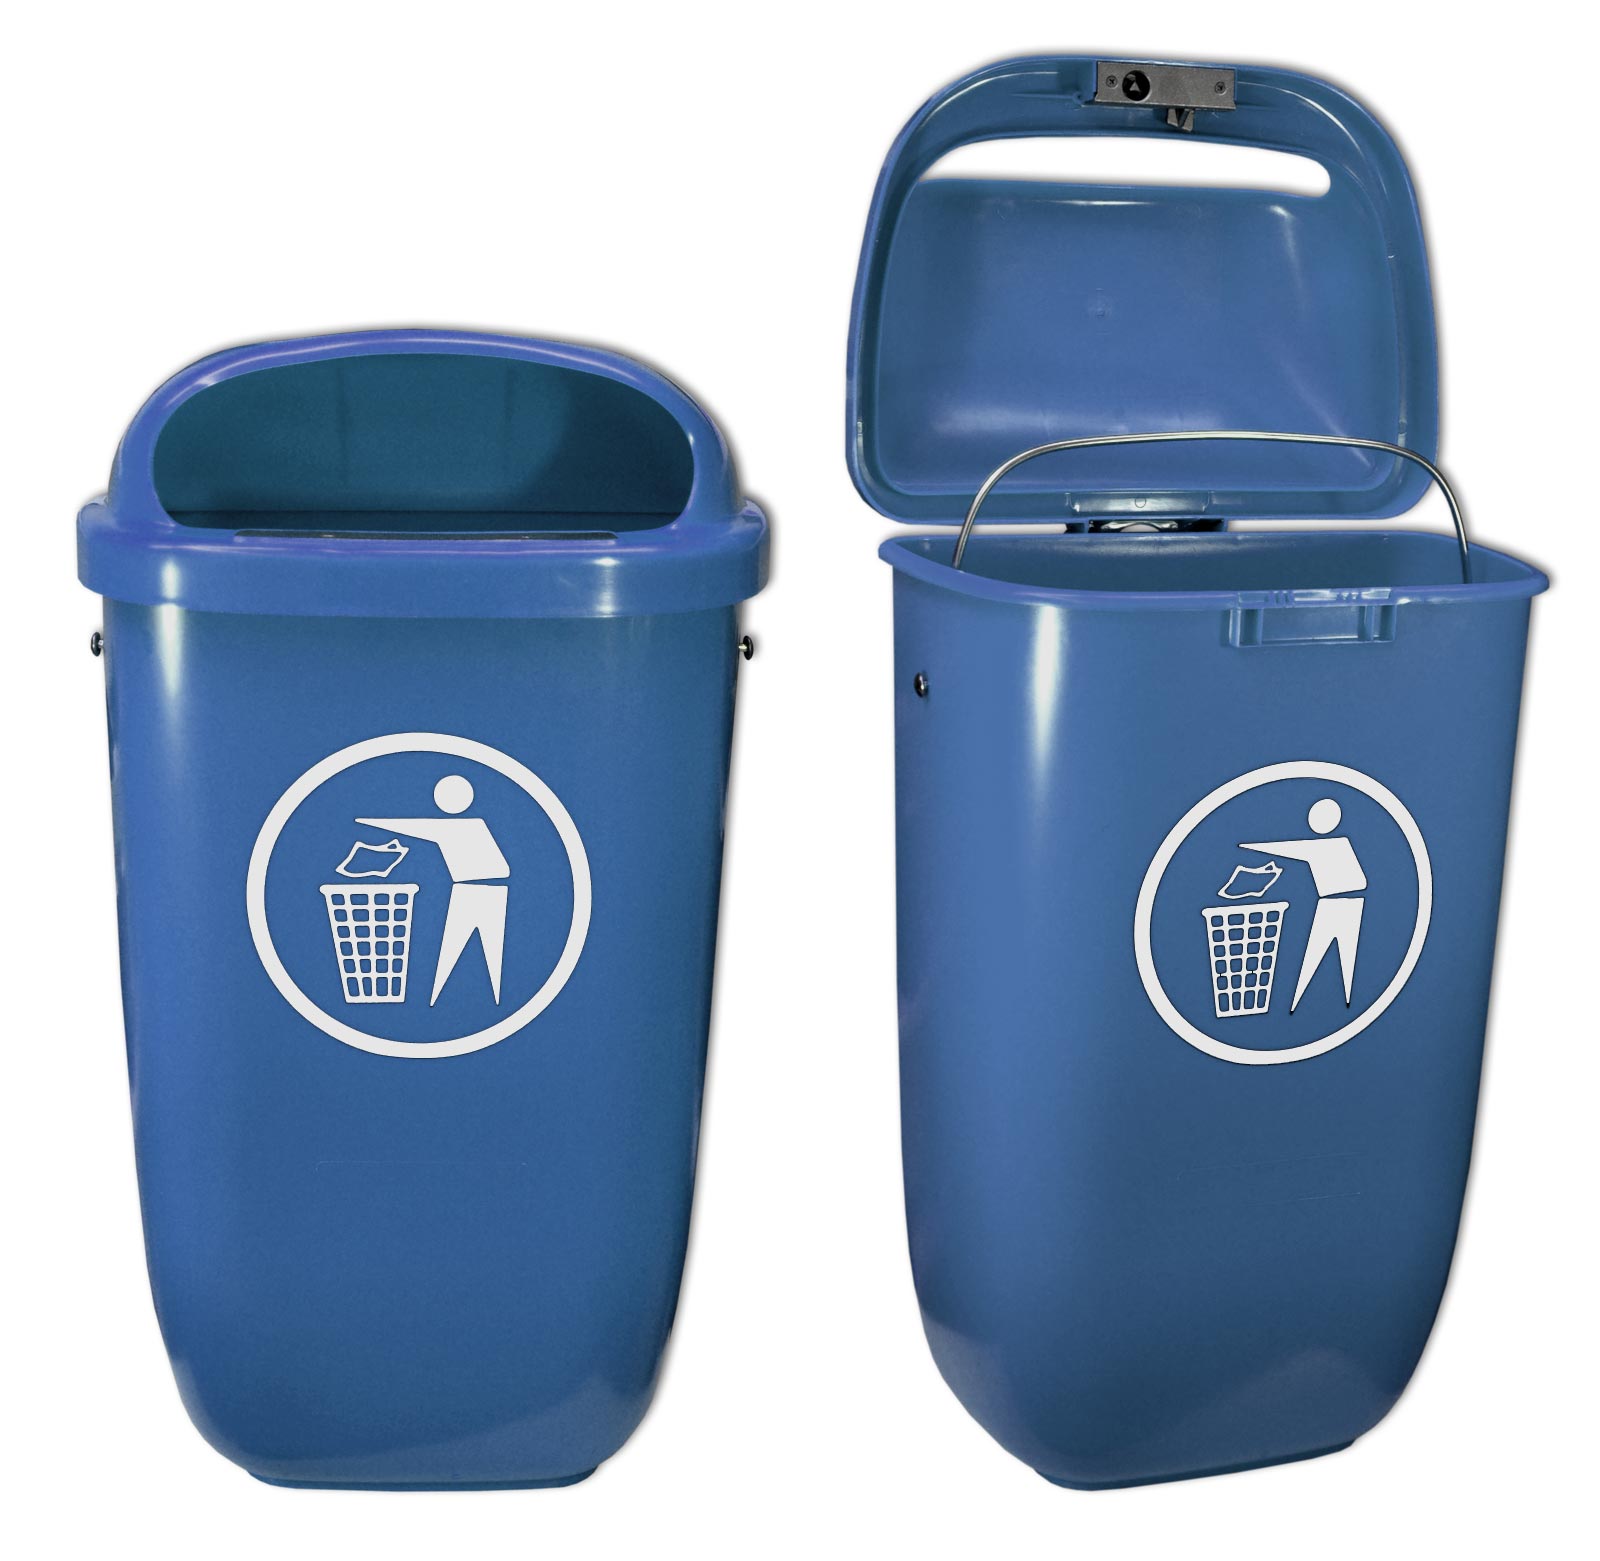 Sulo Papierkorb Abfallbehälter blau nach DIN 30713